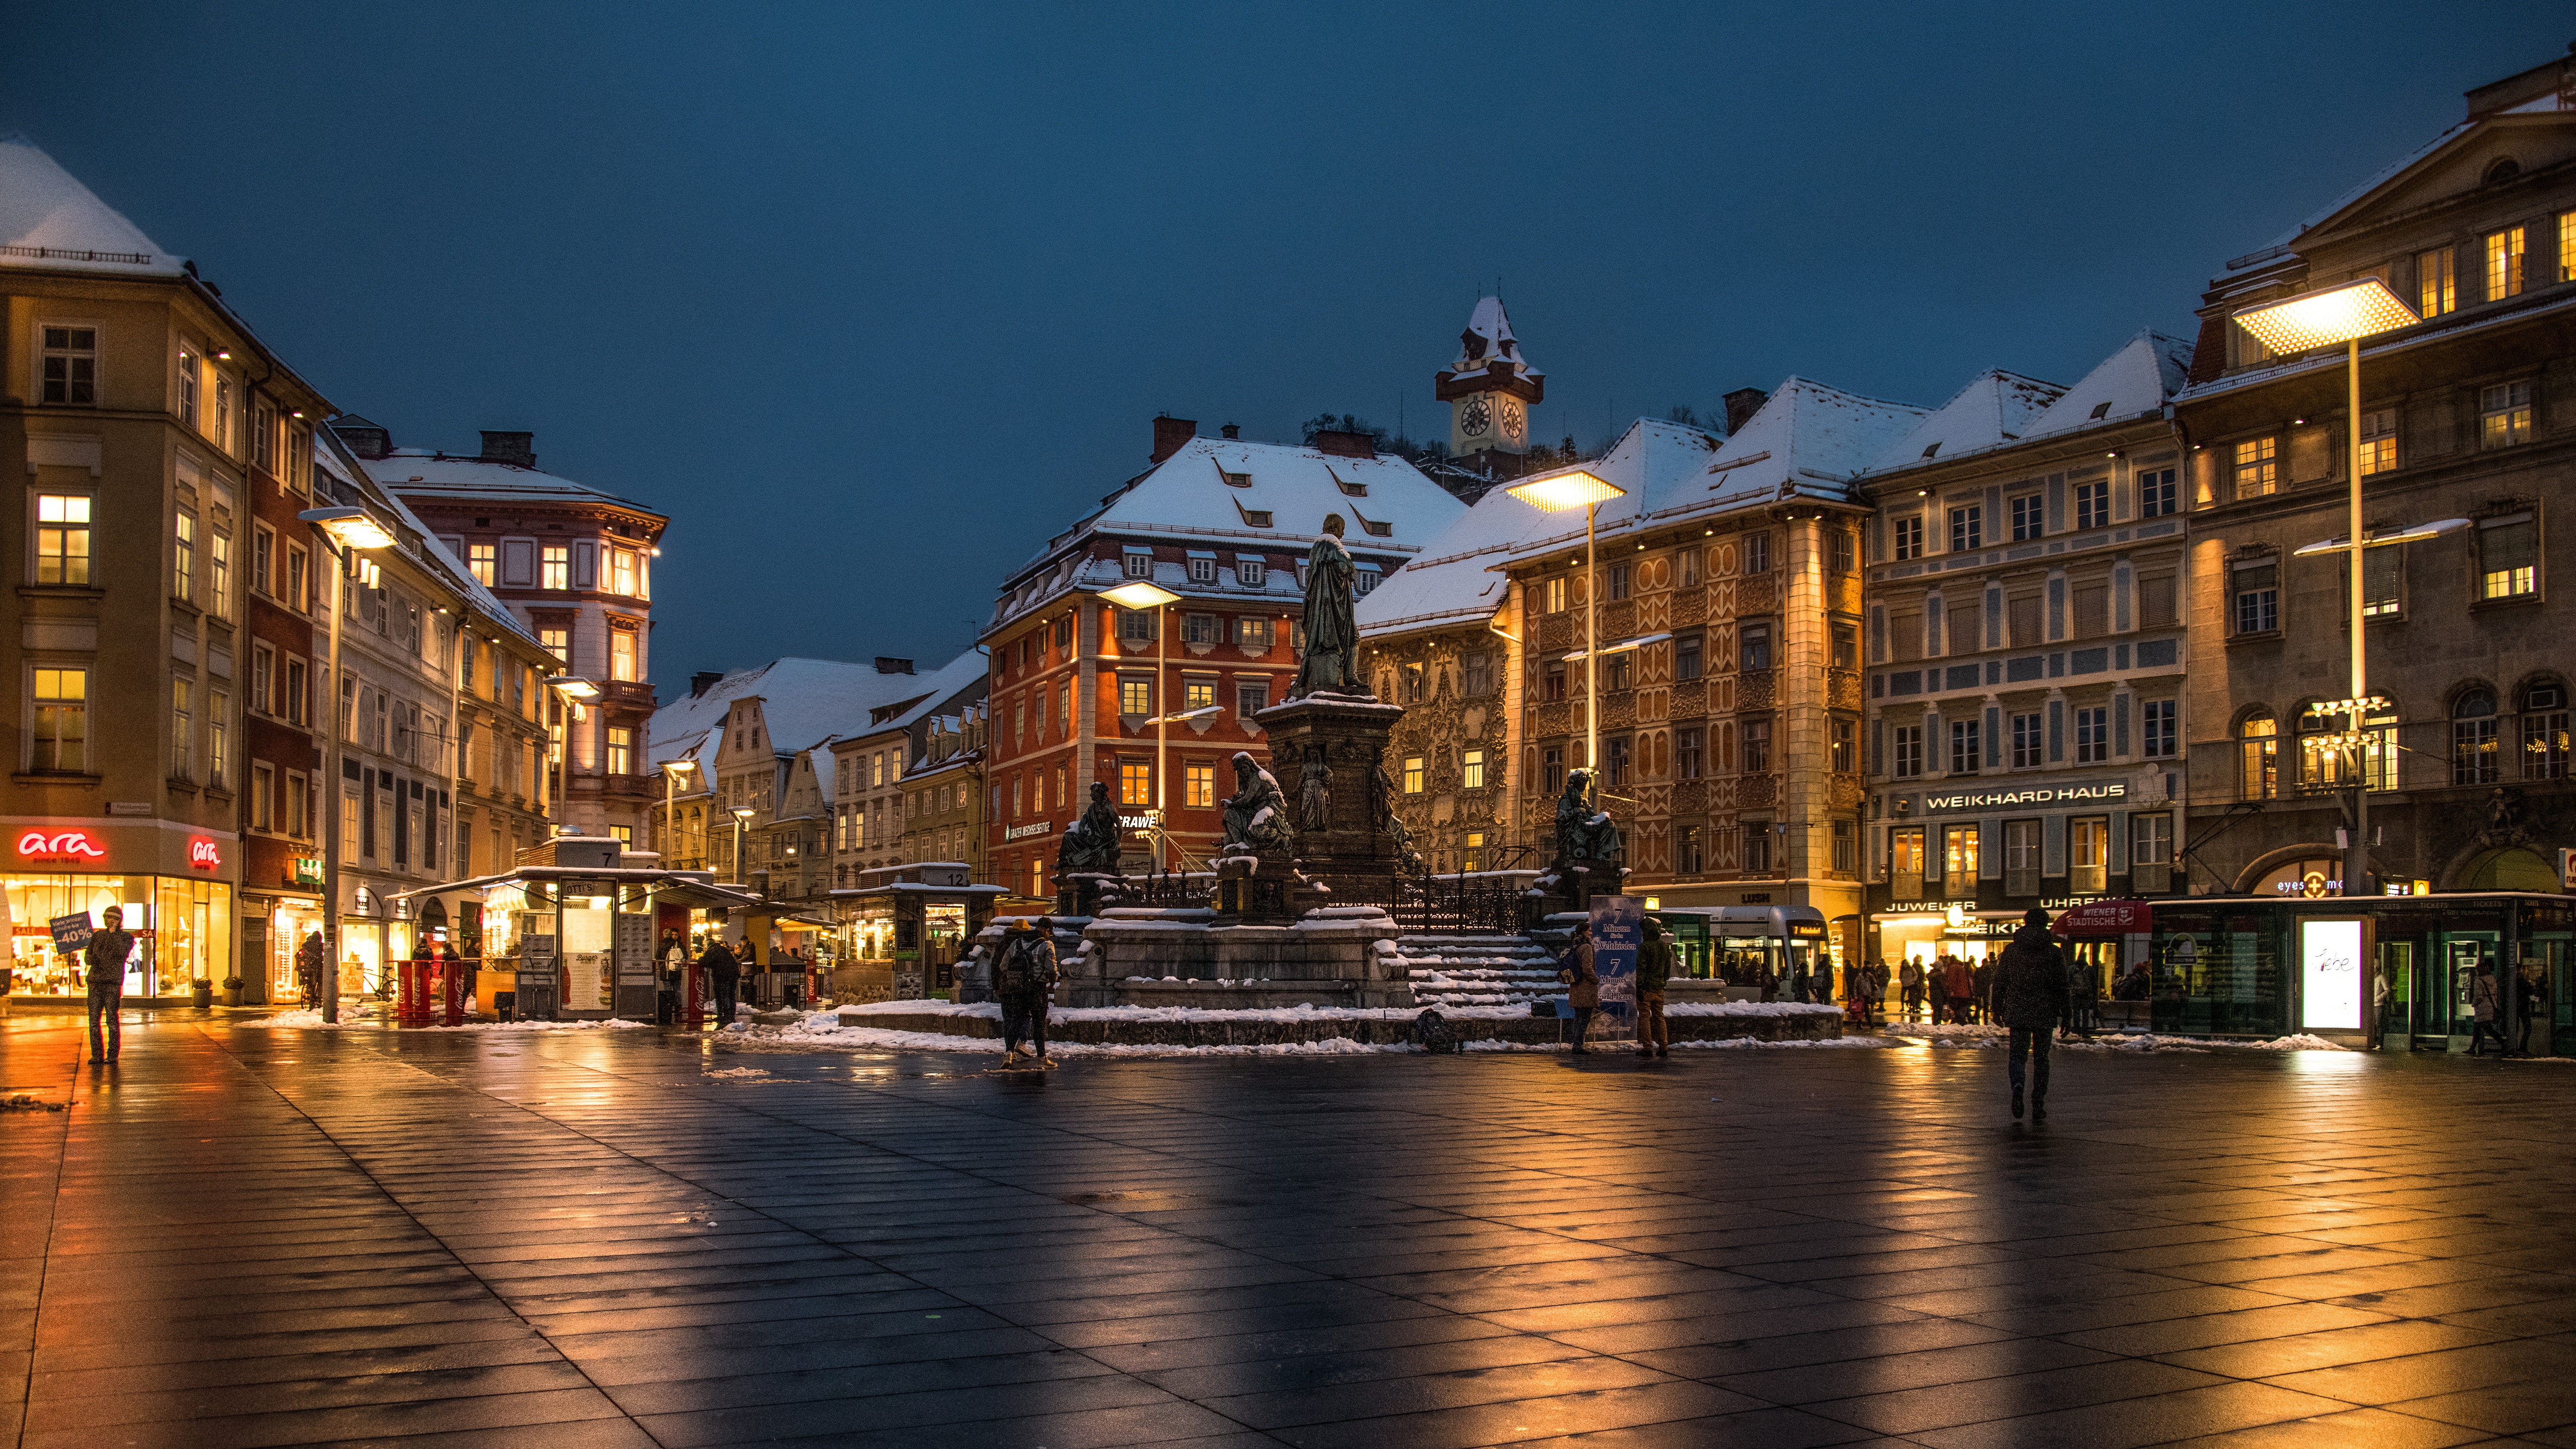 Hauptplatz, Graz, Historical town square surrounded by medieval buildings, Austria by Bernd Thaller